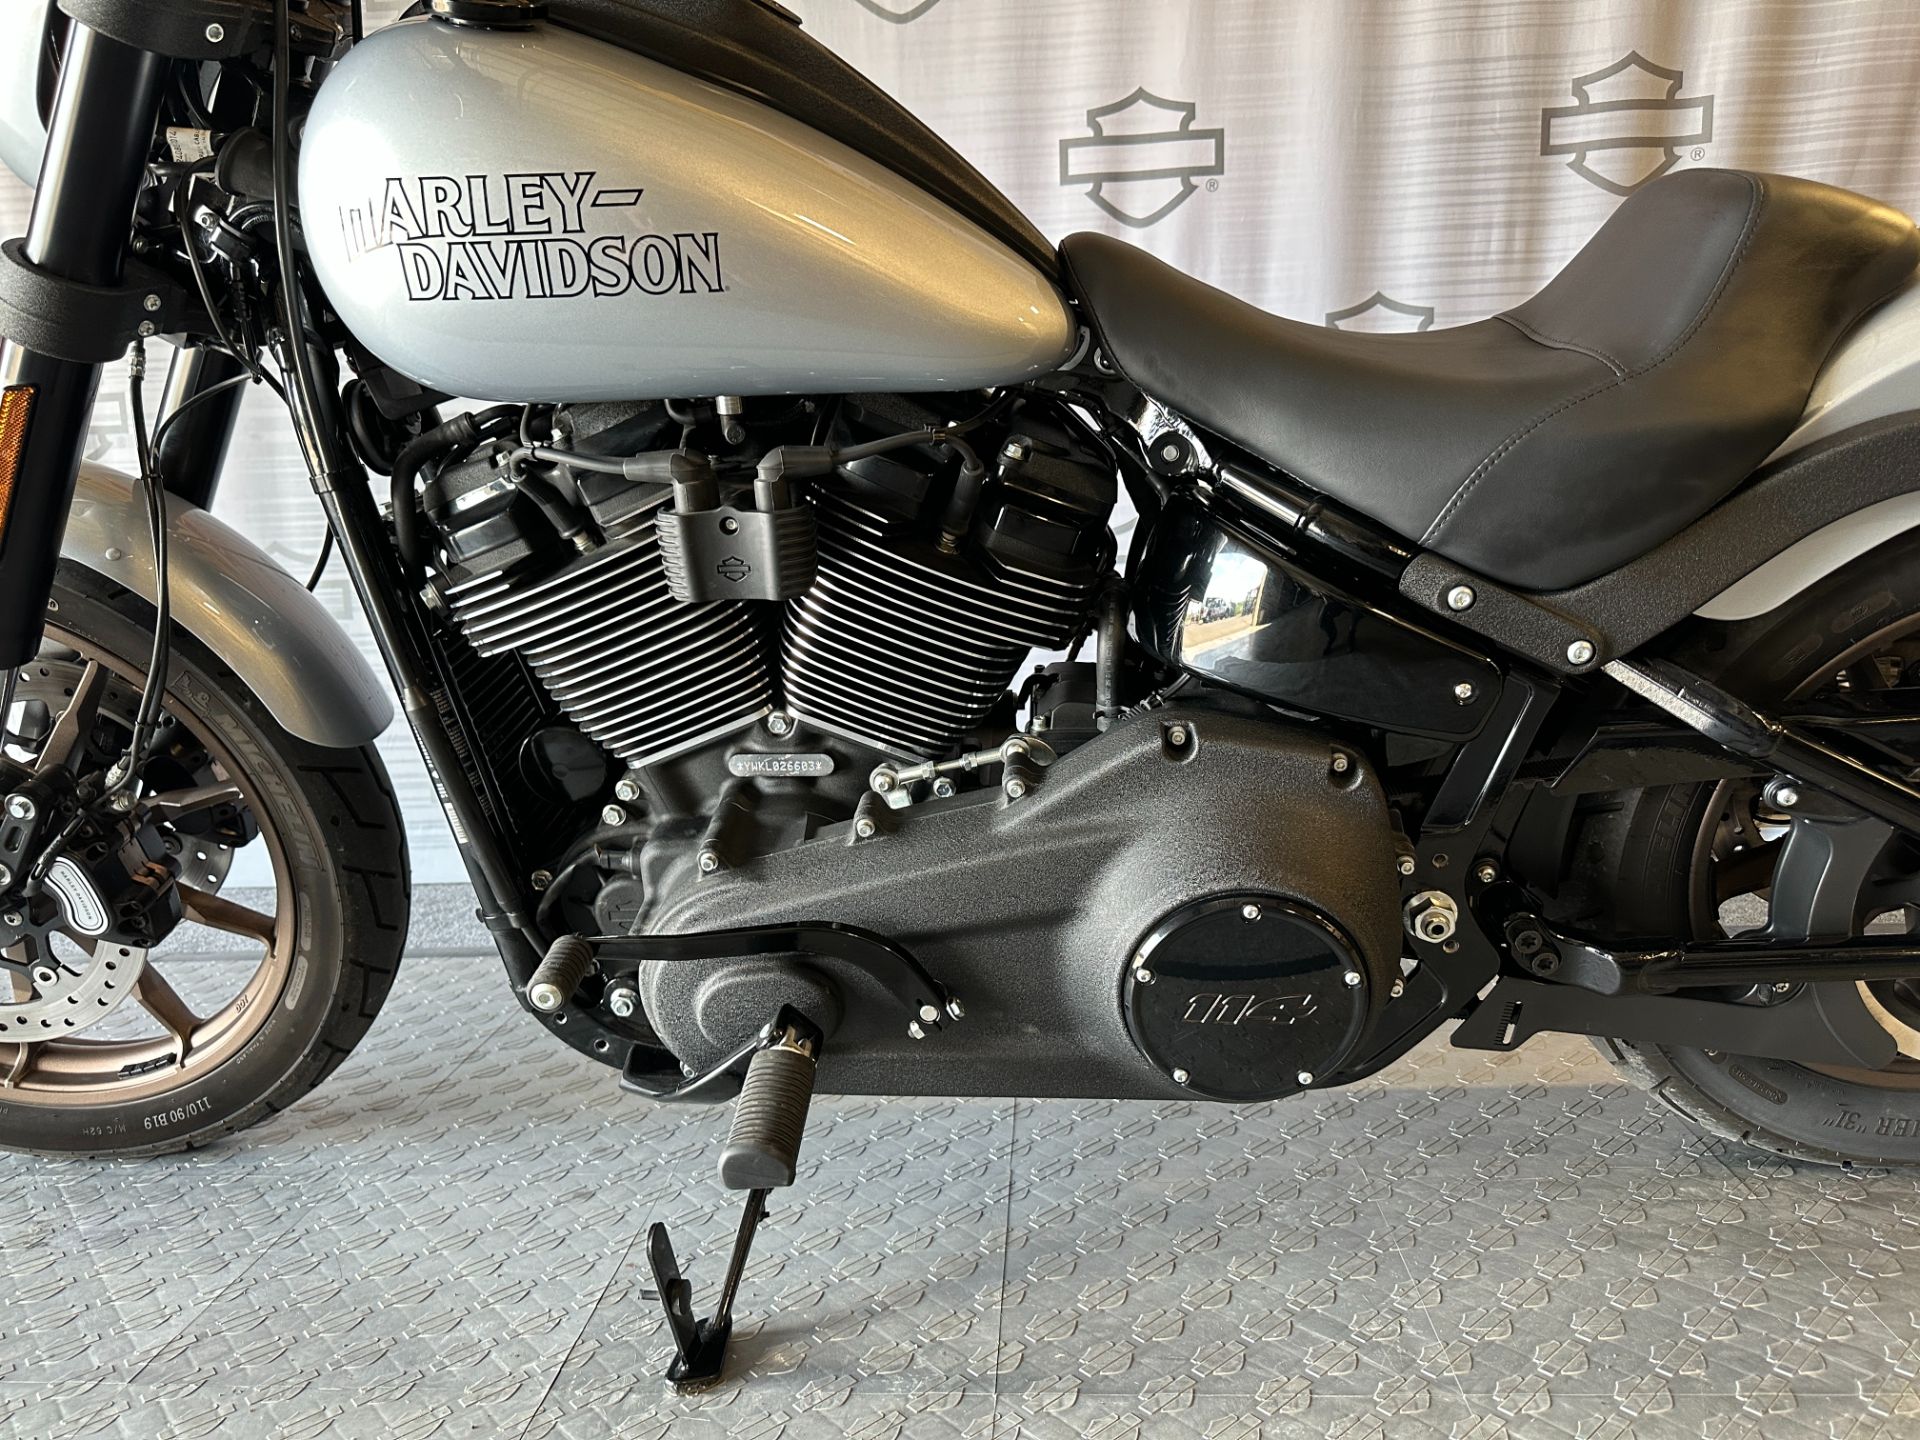 2020 Harley-Davidson Low Rider®S in Morgantown, West Virginia - Photo 10